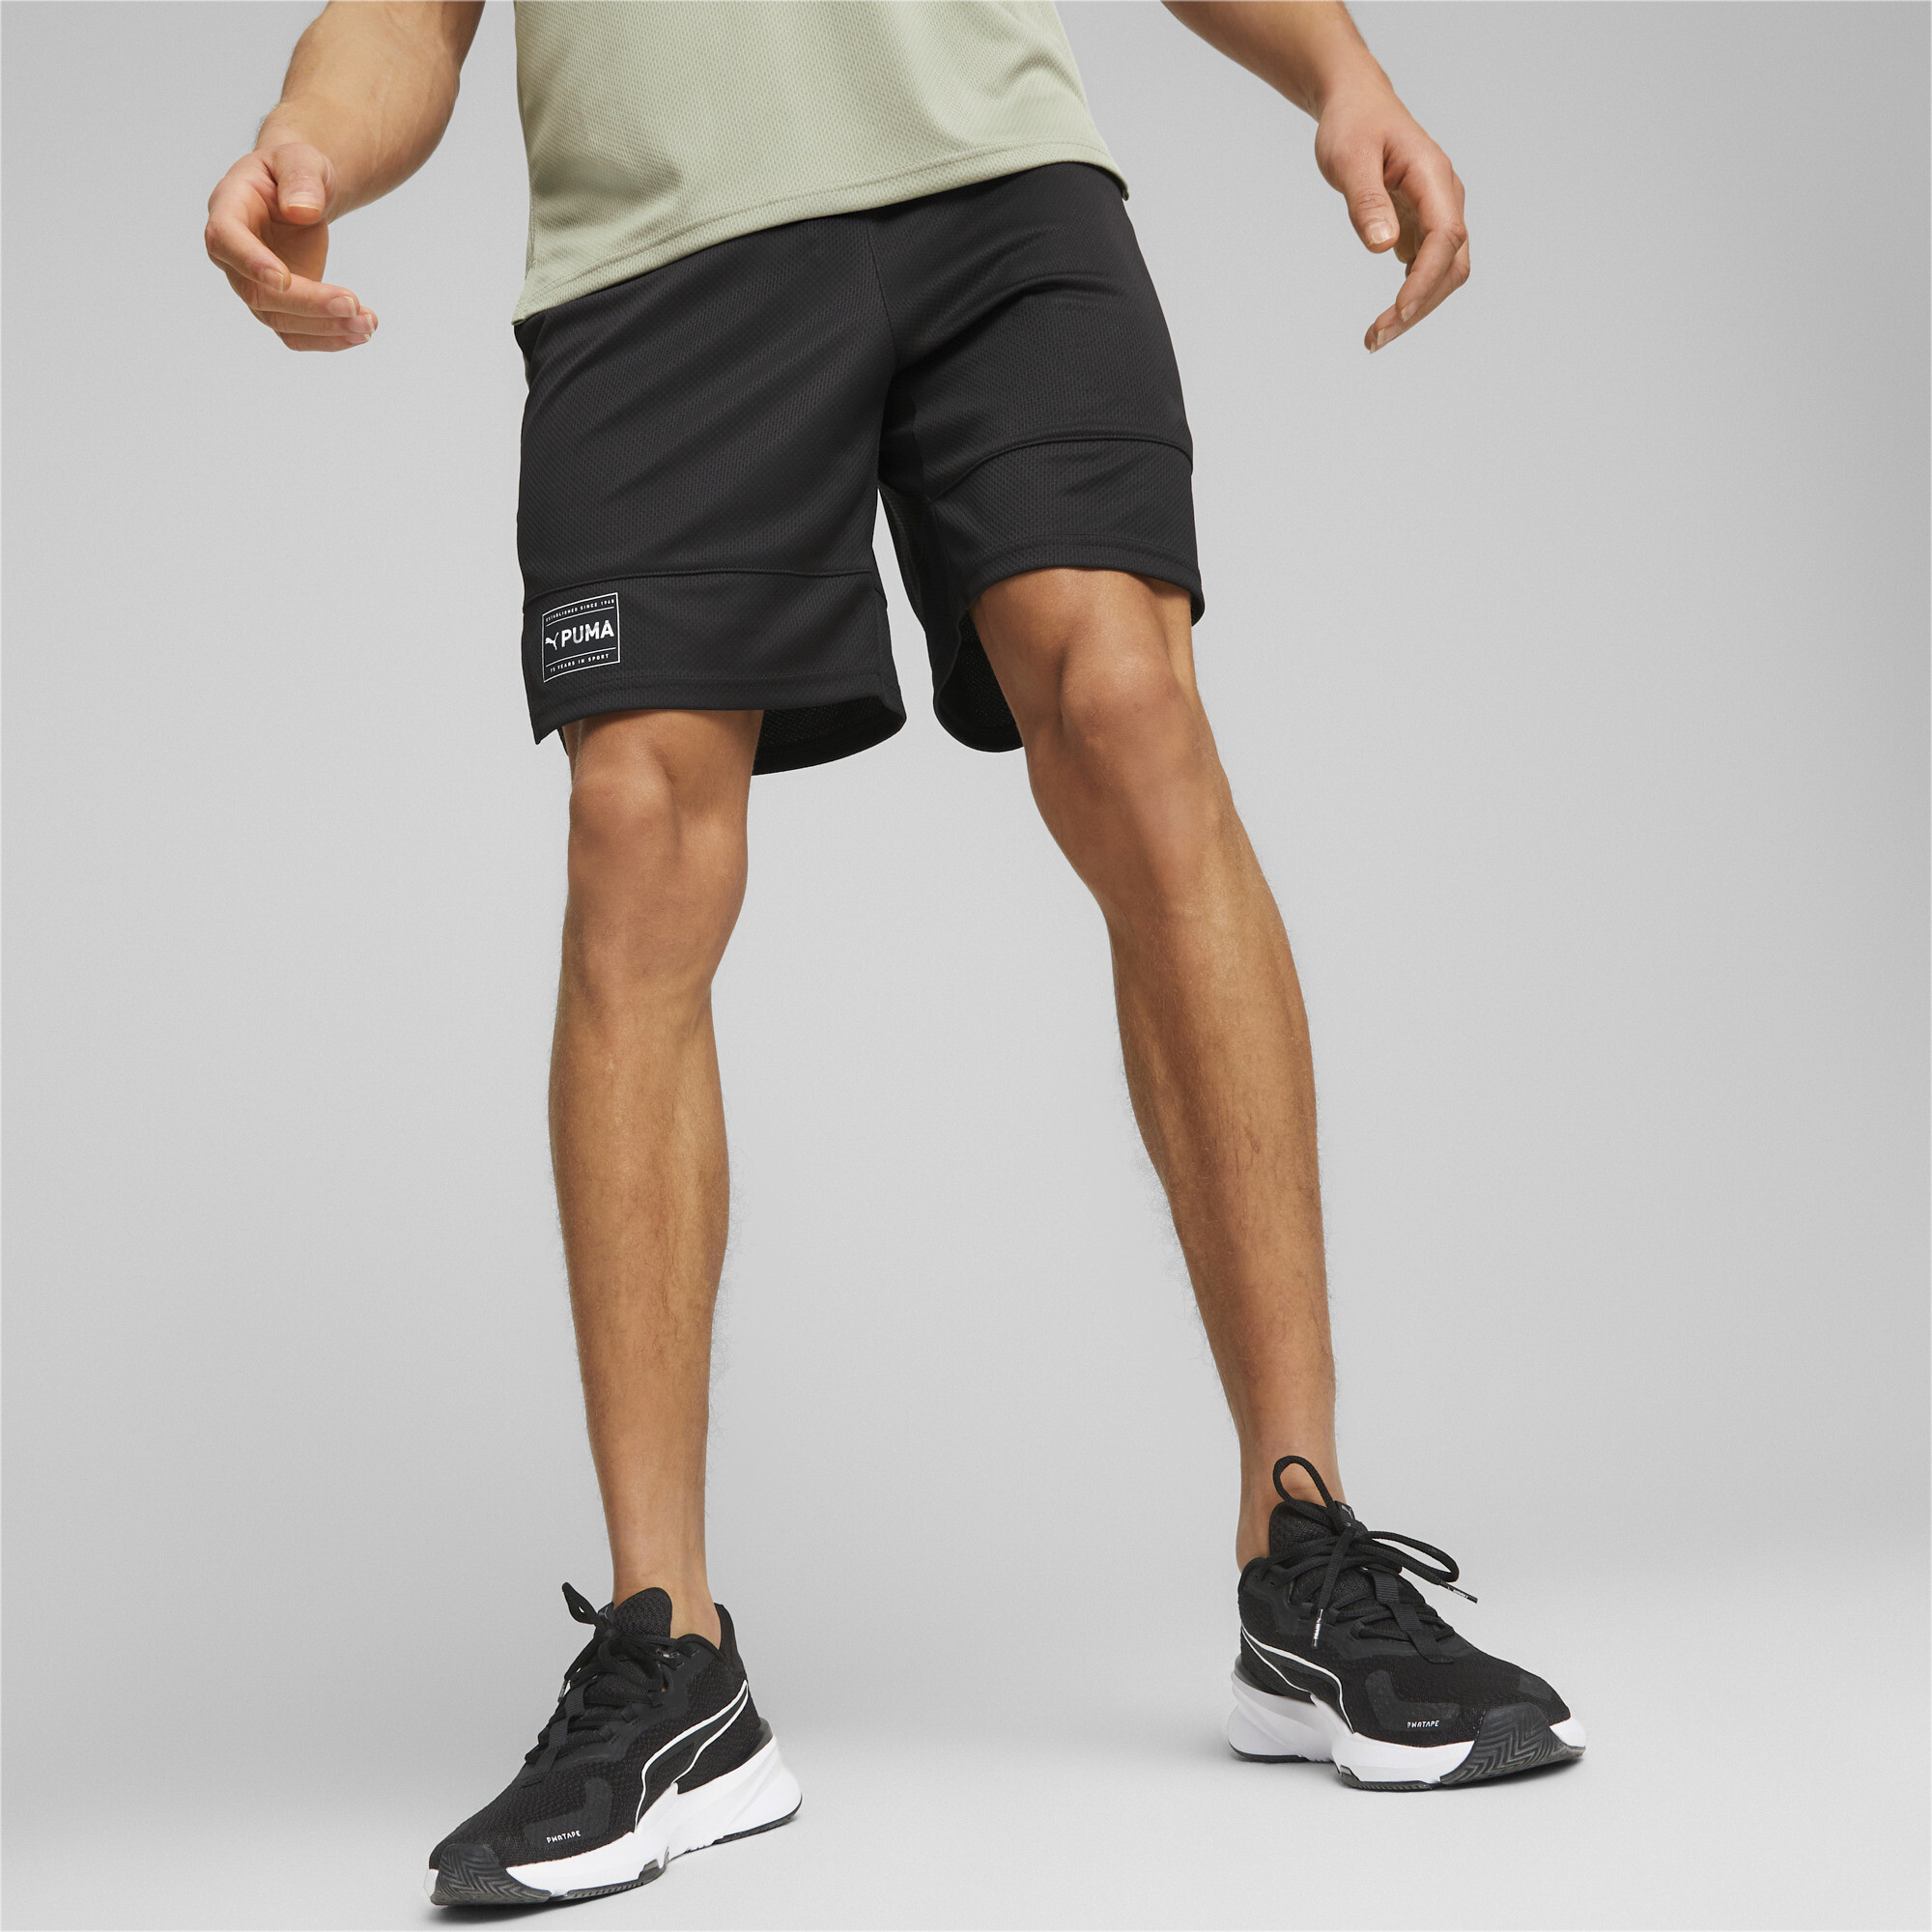 Men's PUMA Fit Ultrabreathe Training Shorts Men In Black, Size Large